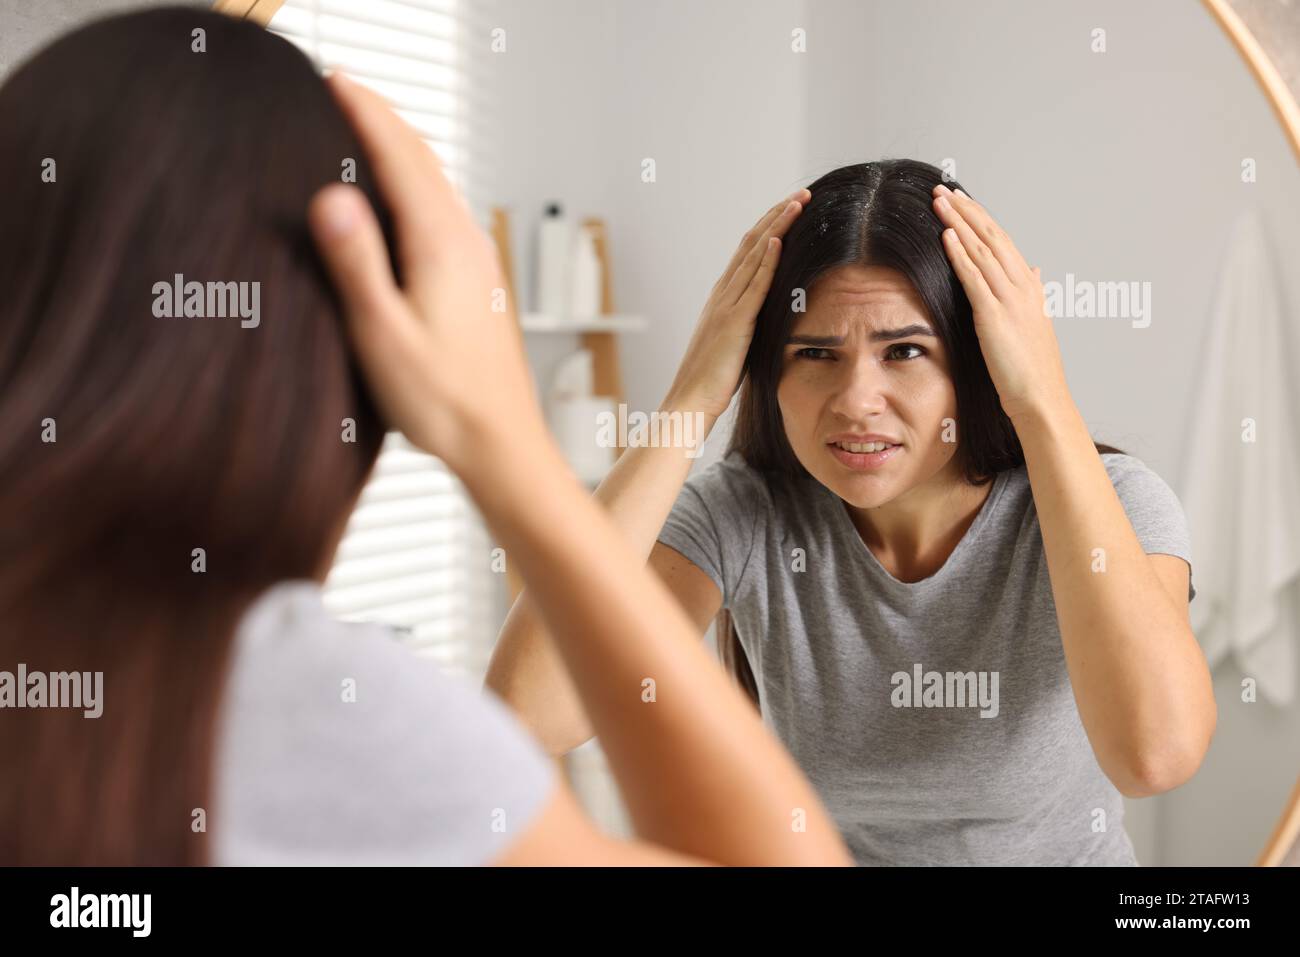 Emotional woman examining her hair and scalp near mirror in bathroom. Dandruff problem Stock Photo